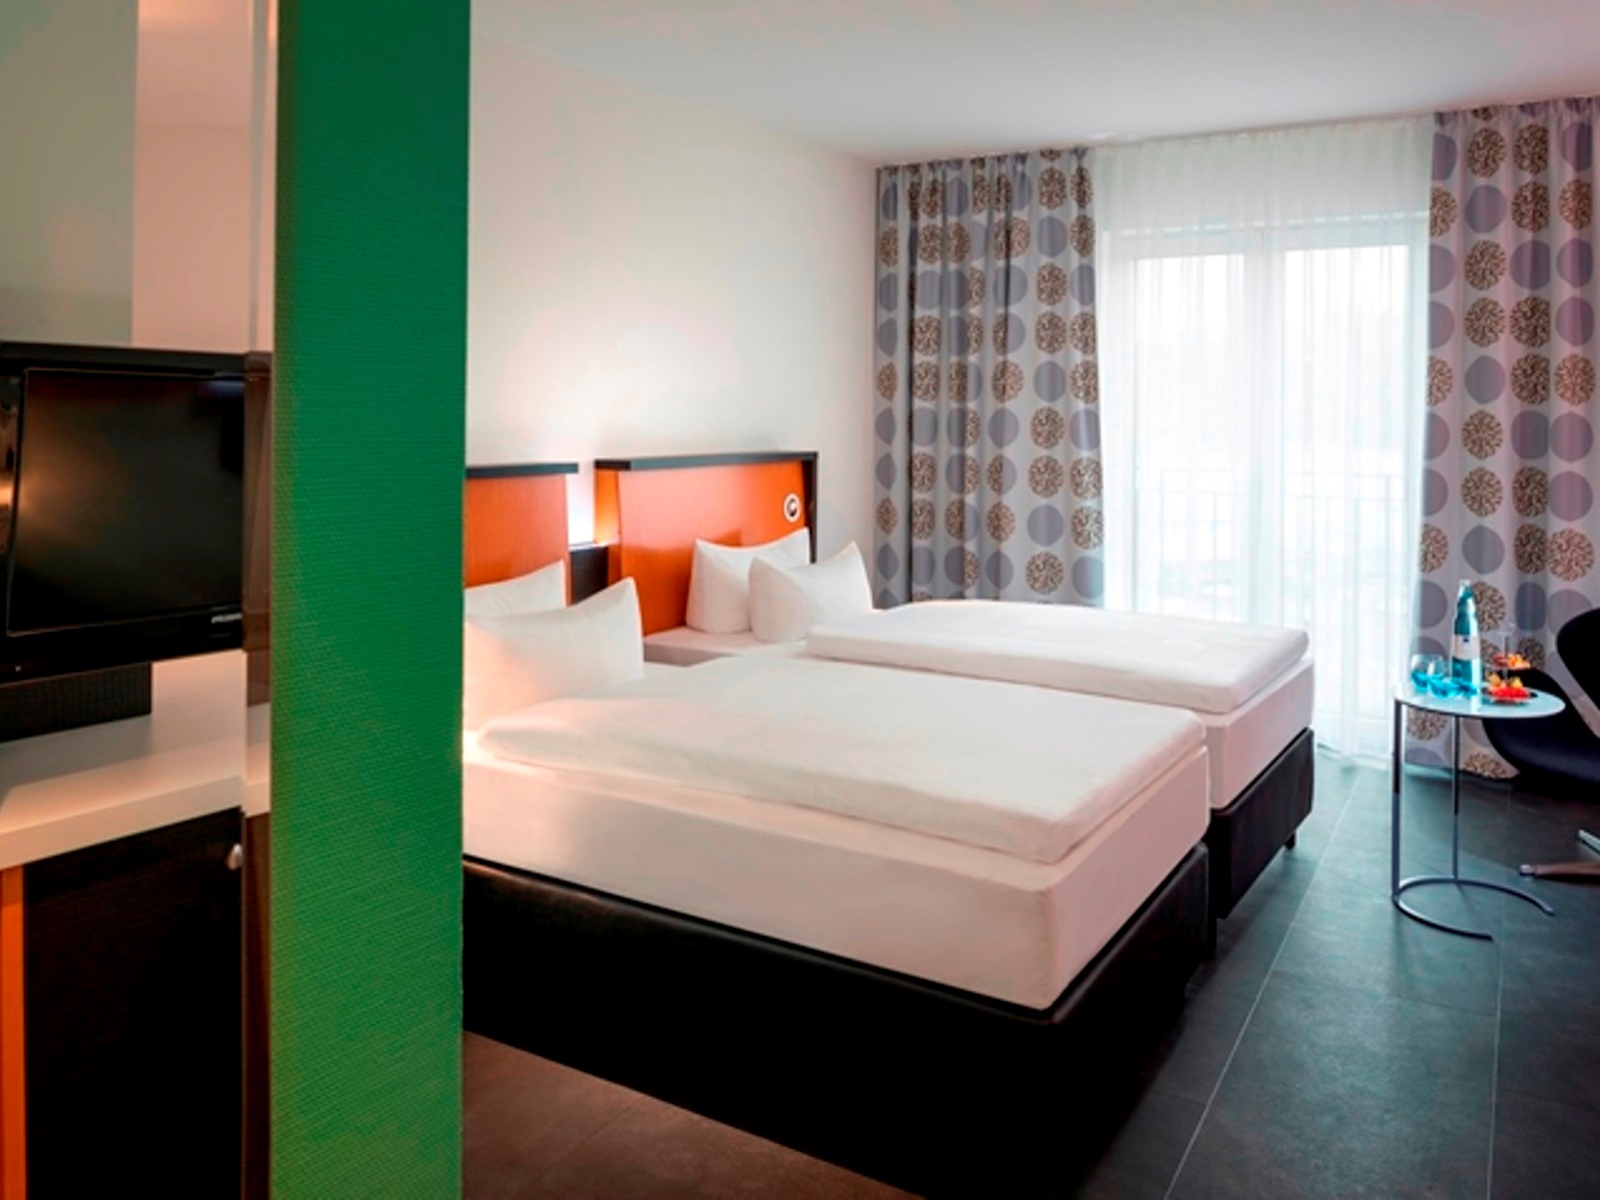 Dorint Hotel Düsseldorf Neuss <br/>49.00 ew <br/> <a href='http://vakantieoplossing.nl/outpage/?id=a05f9517f9853aeb97e6df0ed30cfb43' target='_blank'>View Details</a>